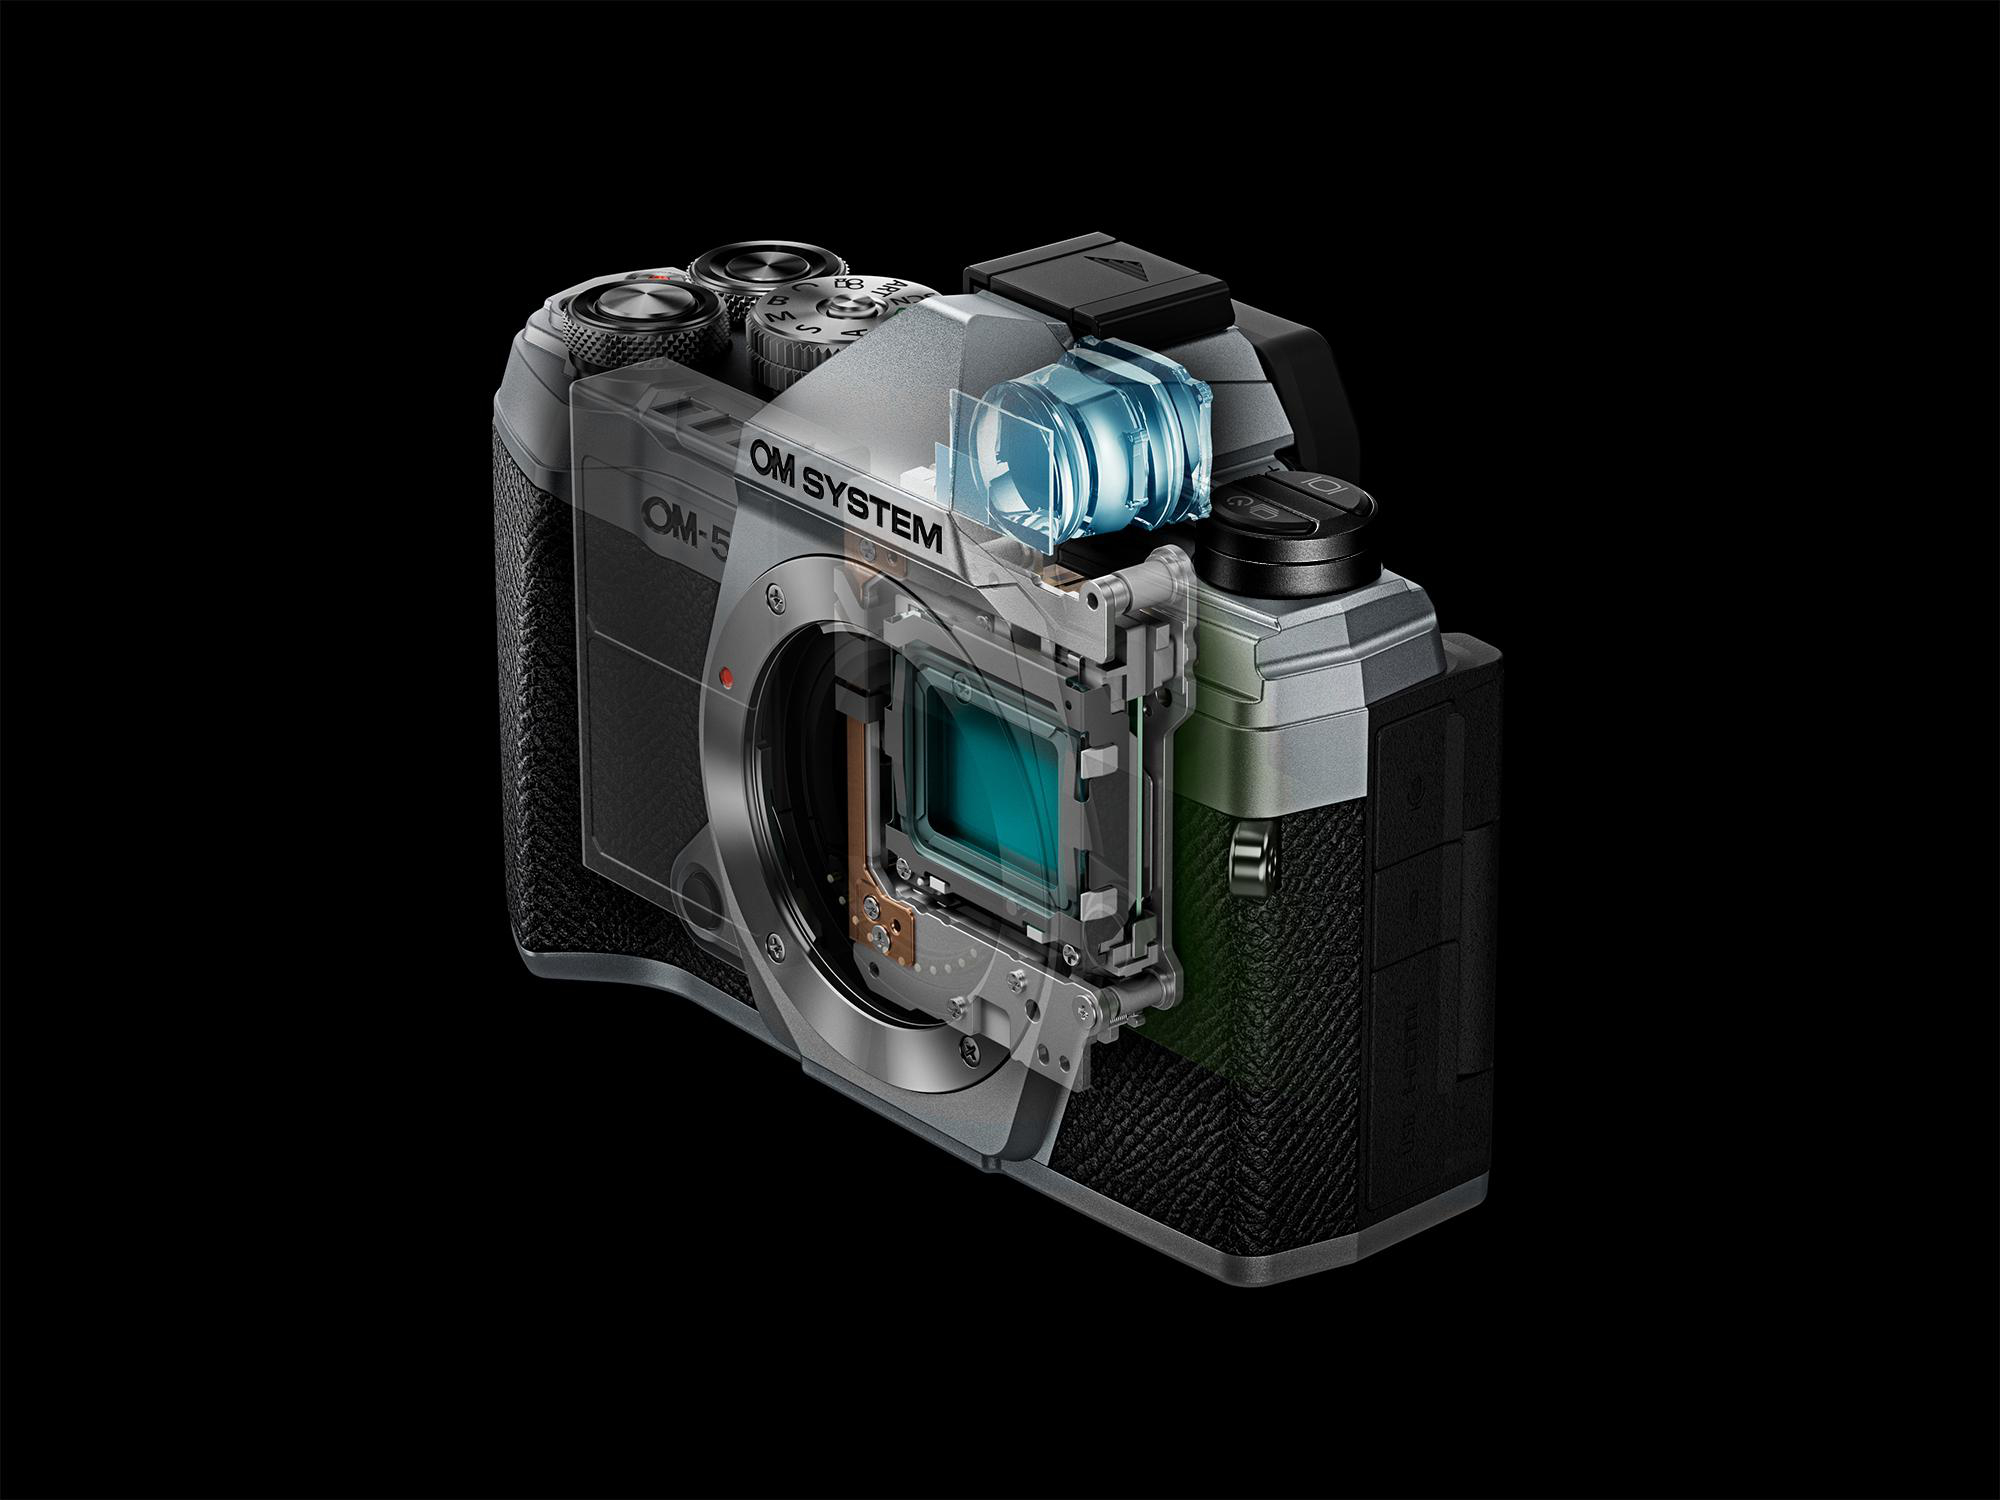 OM SYSTEM OM-5 Kit Display mit Systemkamera cm WLAN Touchscreen, mm 12-45 7,6 , Objektiv